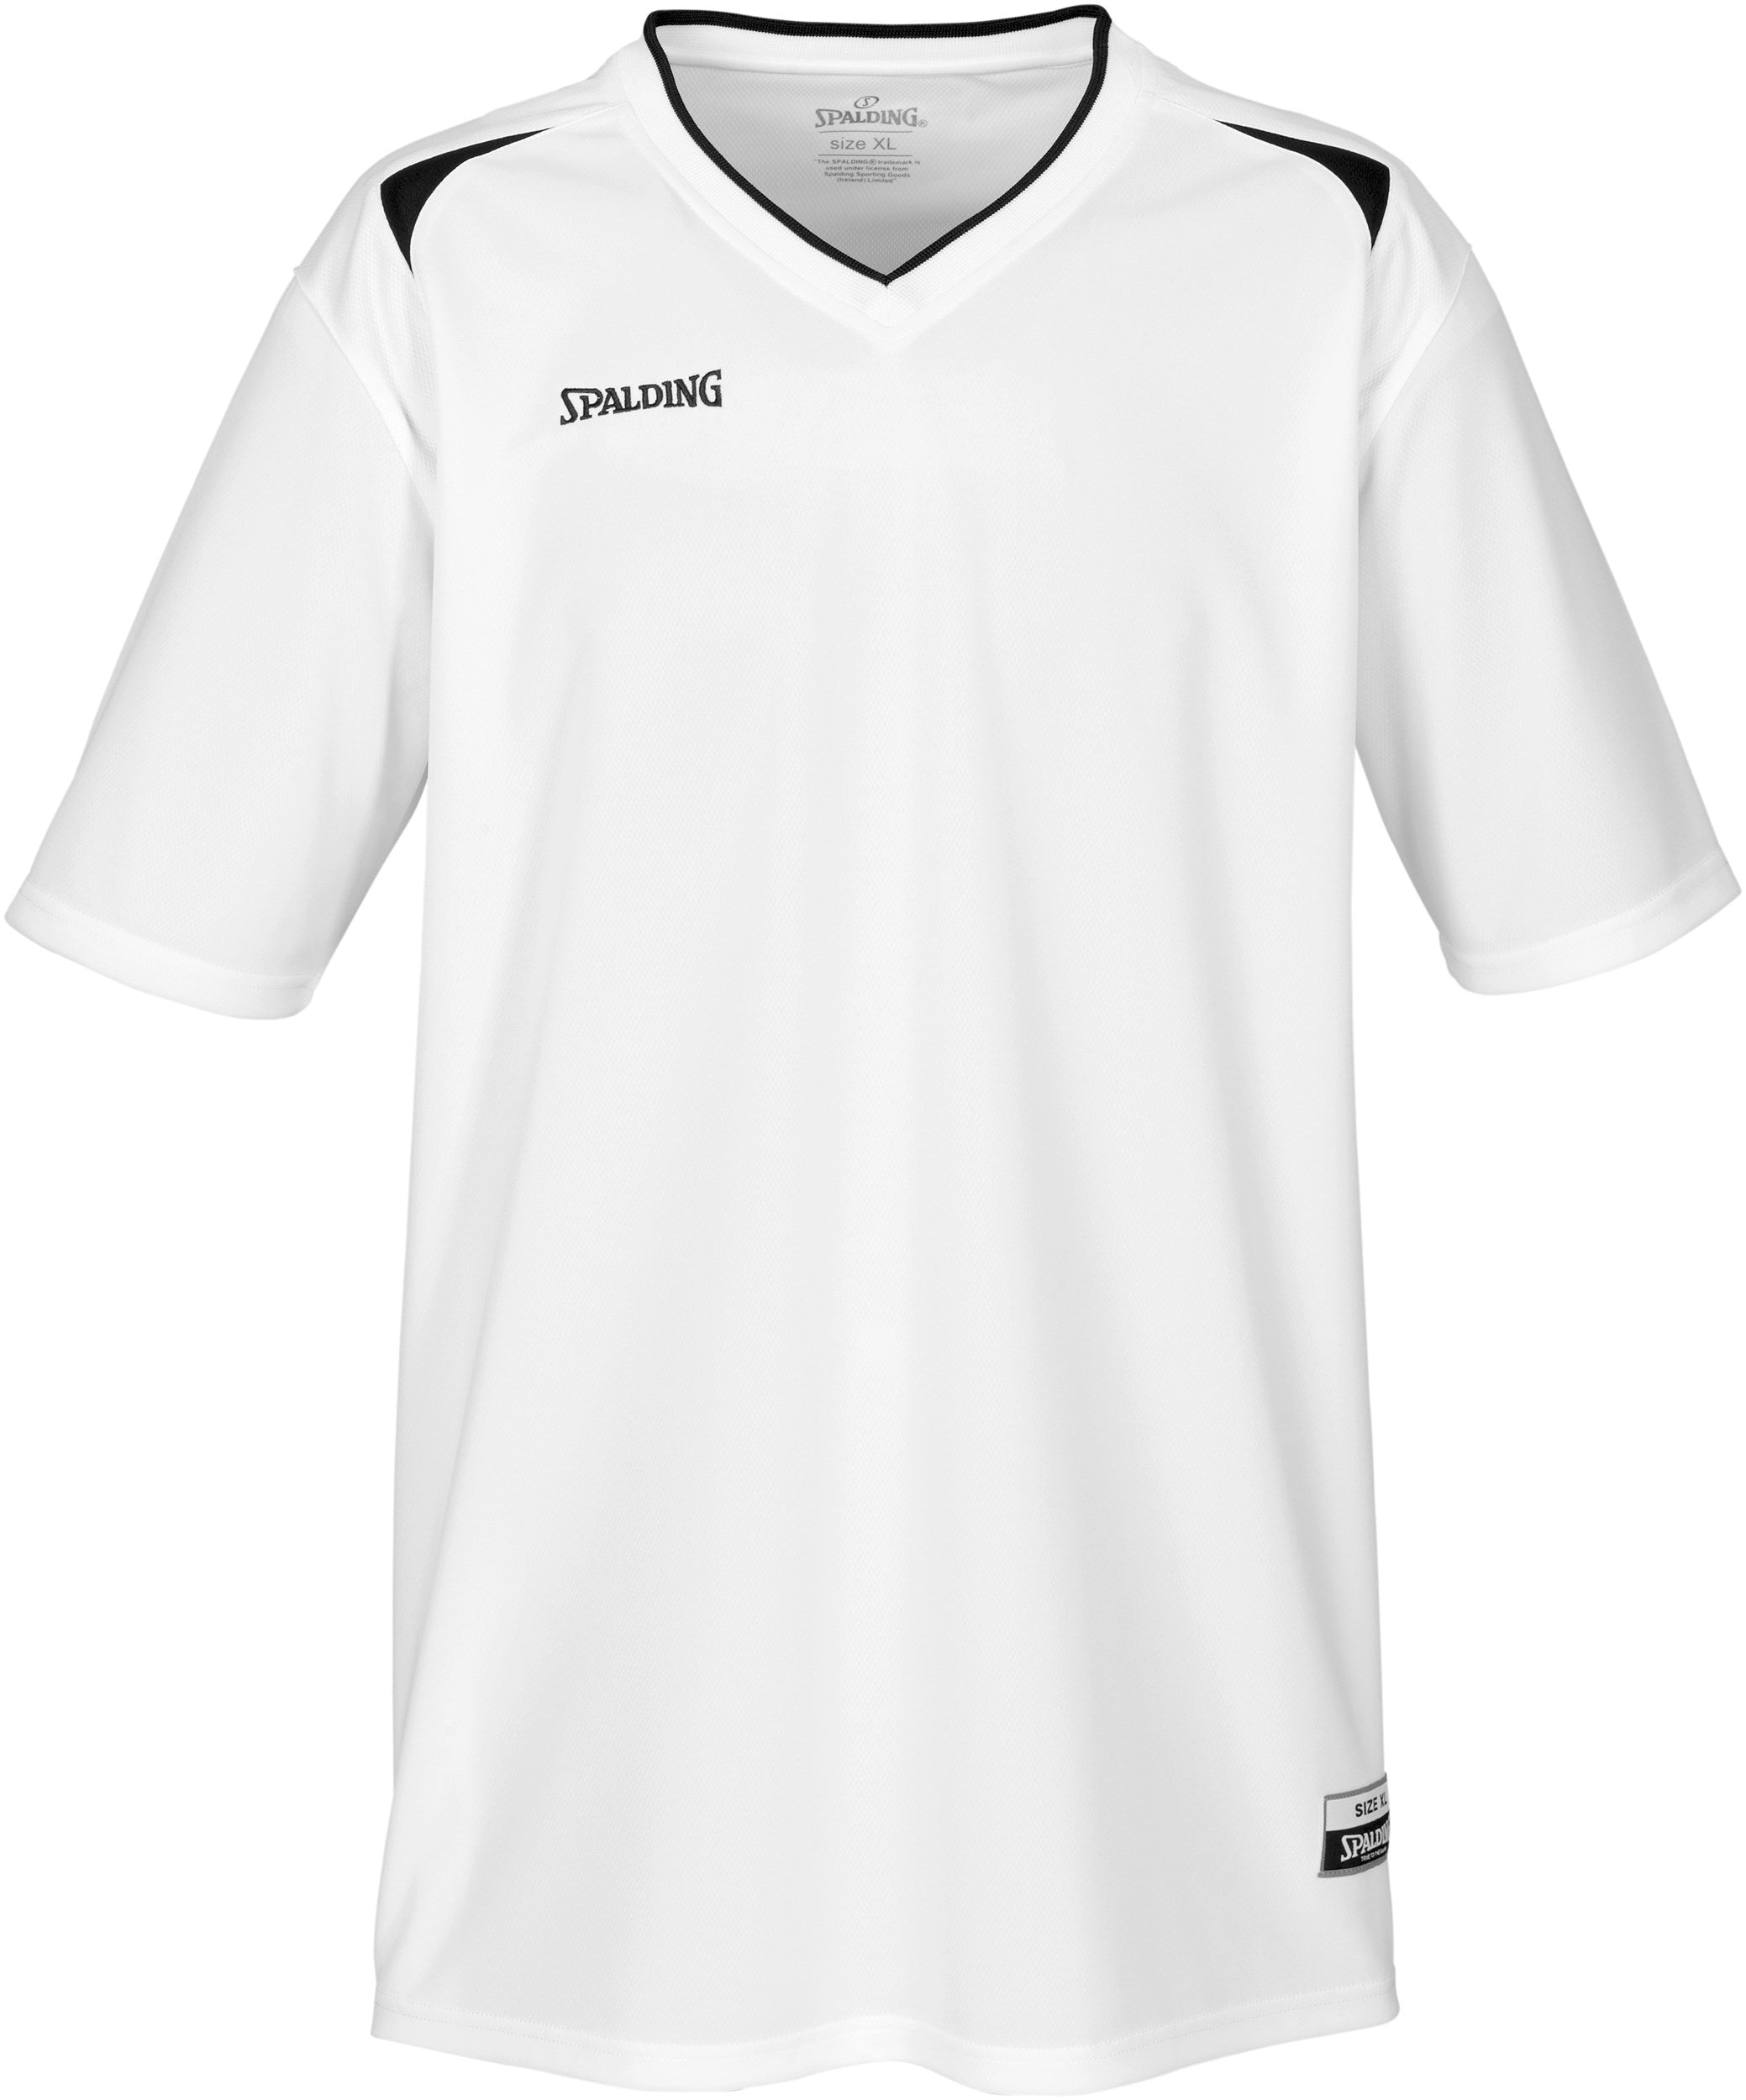 Spalding Basketball Attack Shooting Shirt - White Black SP-300211603